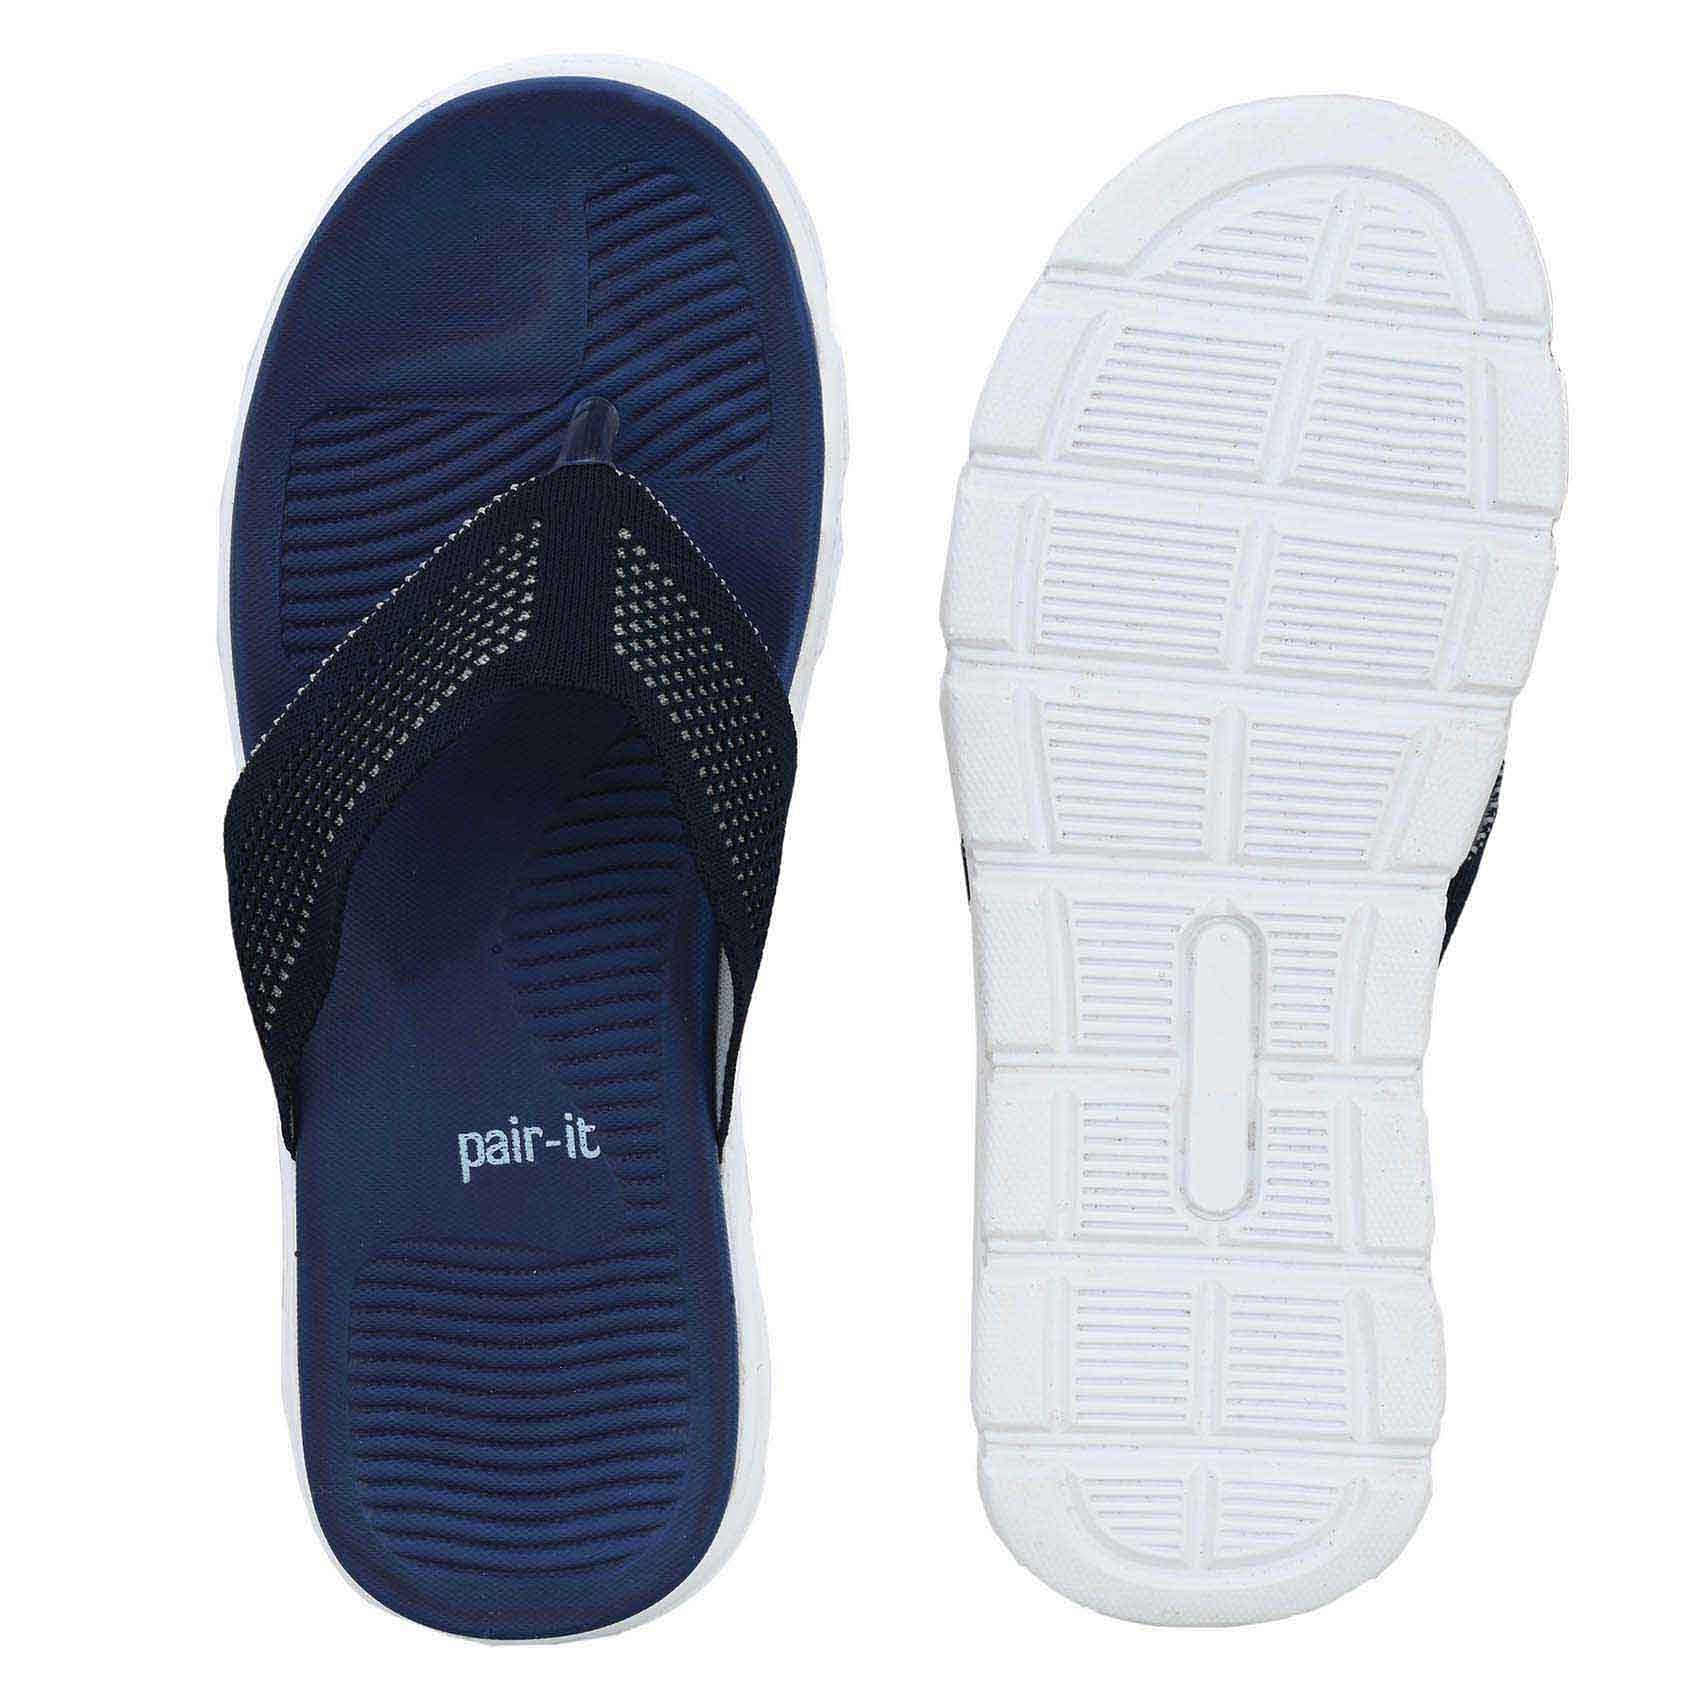 Pair-it Men's Rubberised EVA Slippers-LZ-Slippers114-Blue